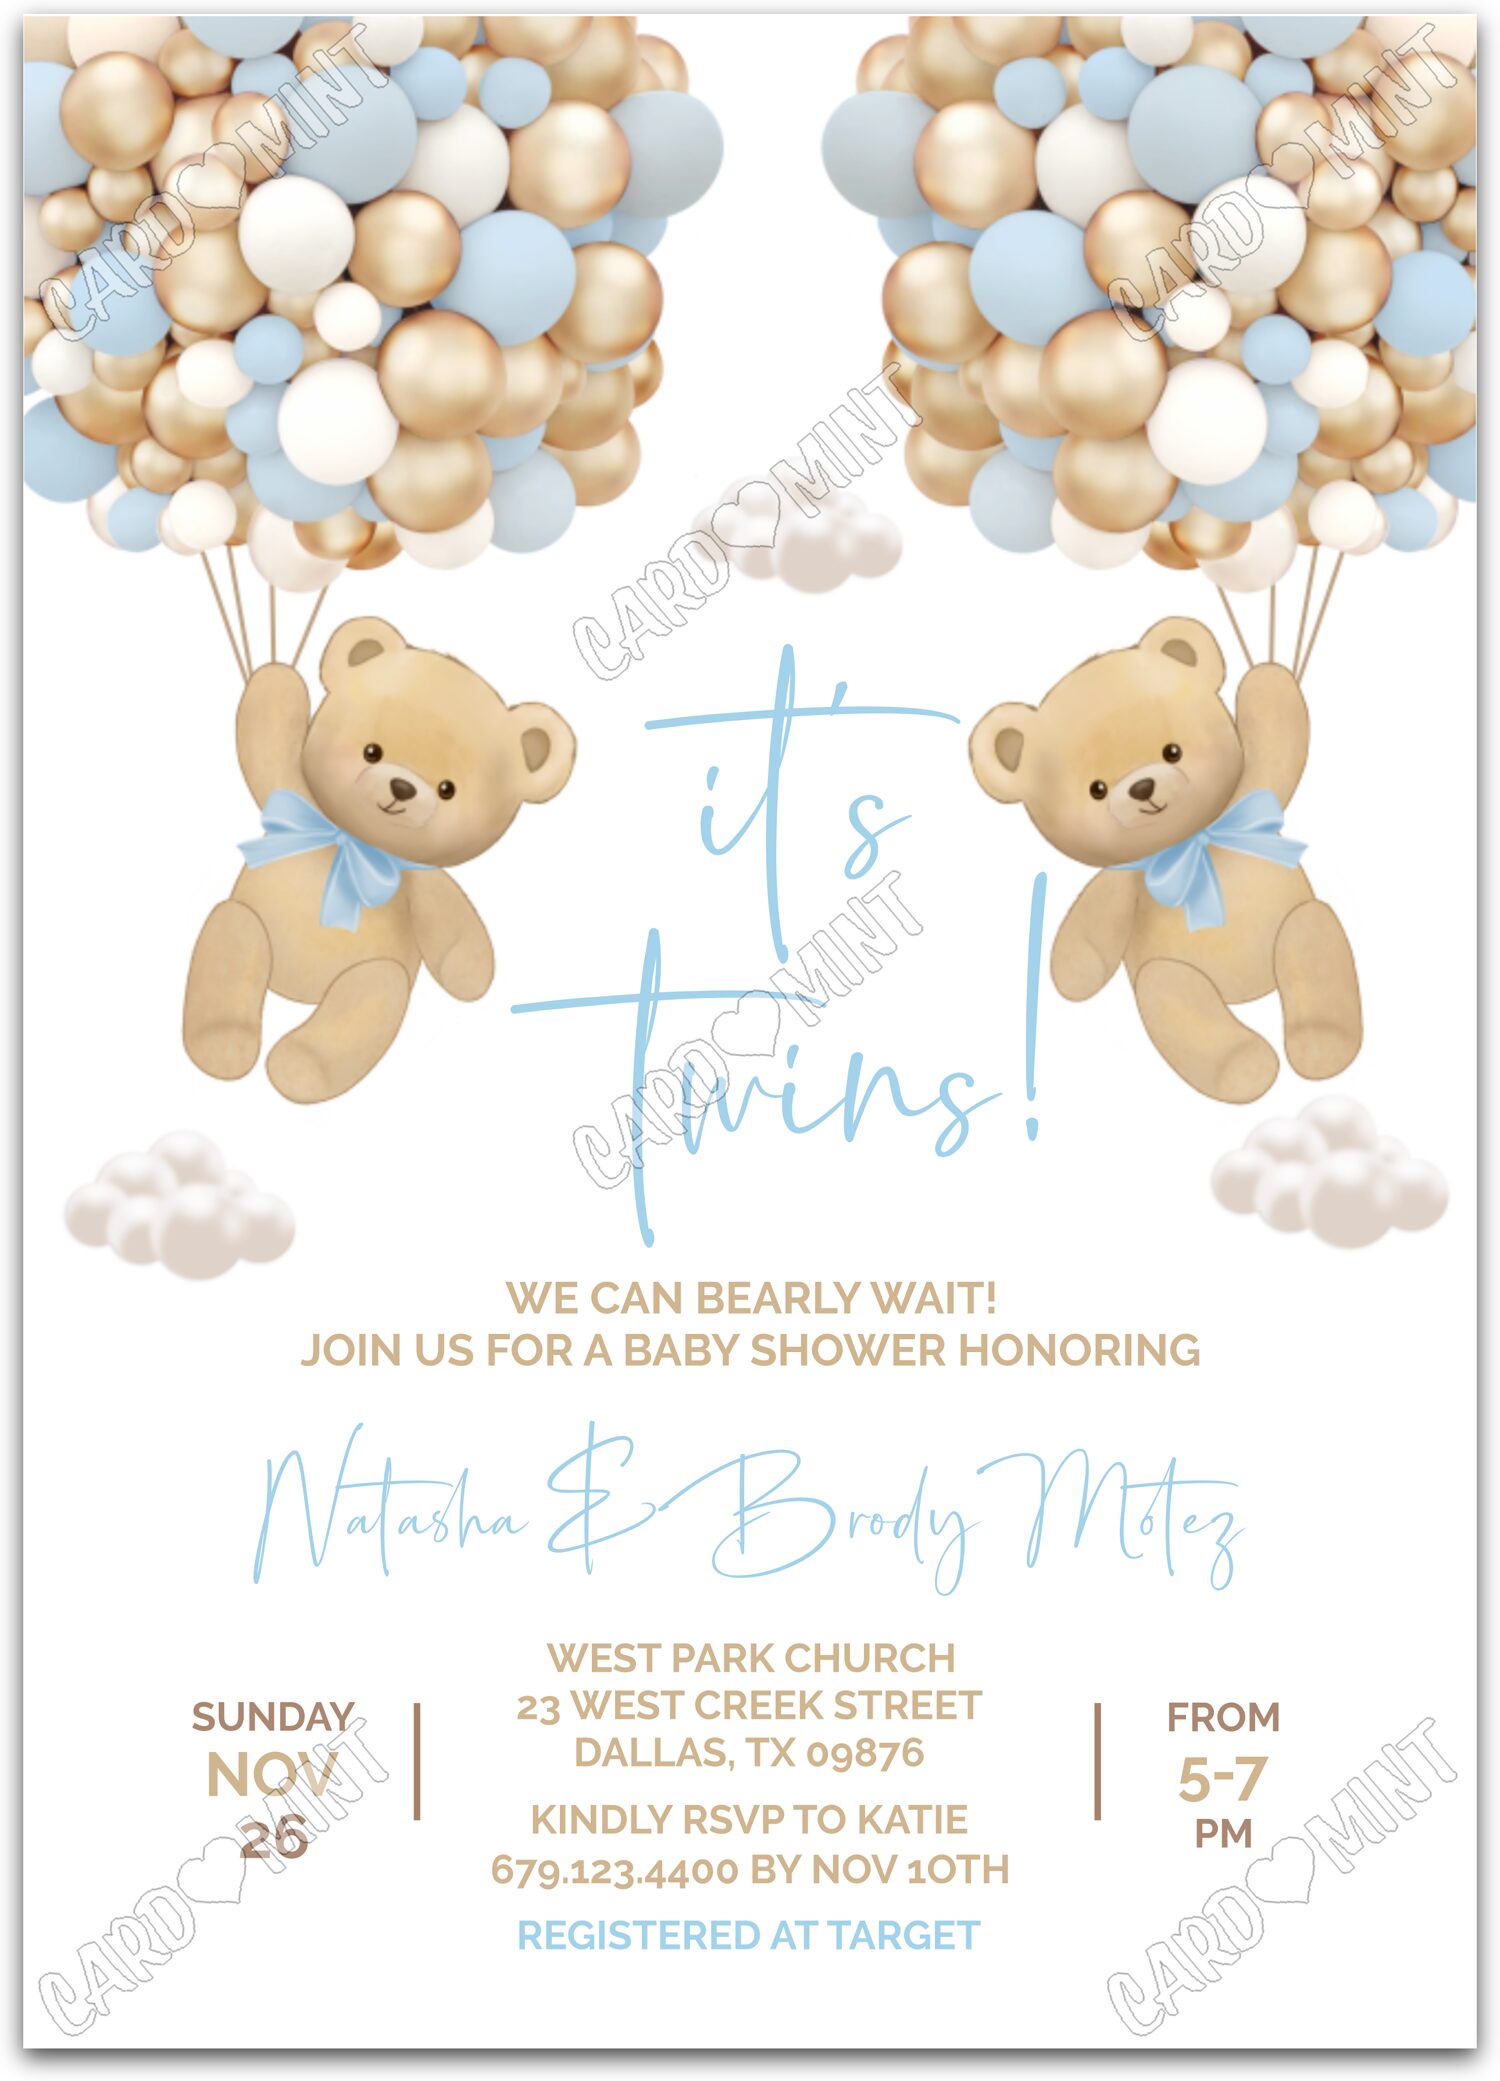 Editable It's Twins blue/tan teddy bears boy Twins Baby Shower 5"x7" Invitation EV1147